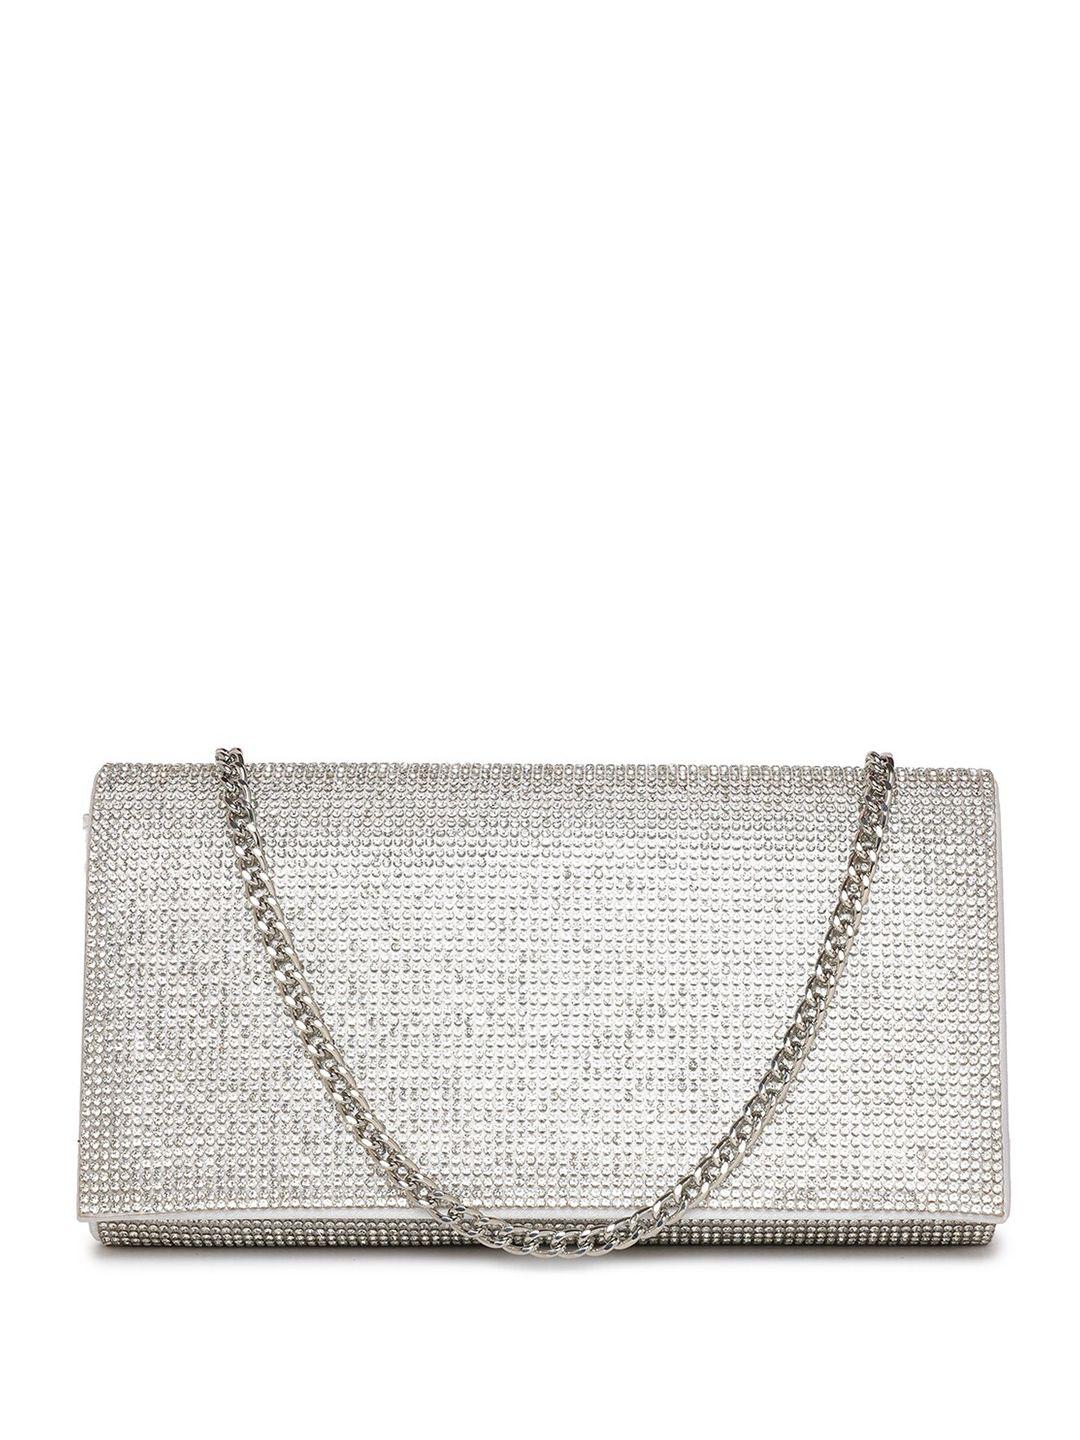 aldo embellished purse clutch